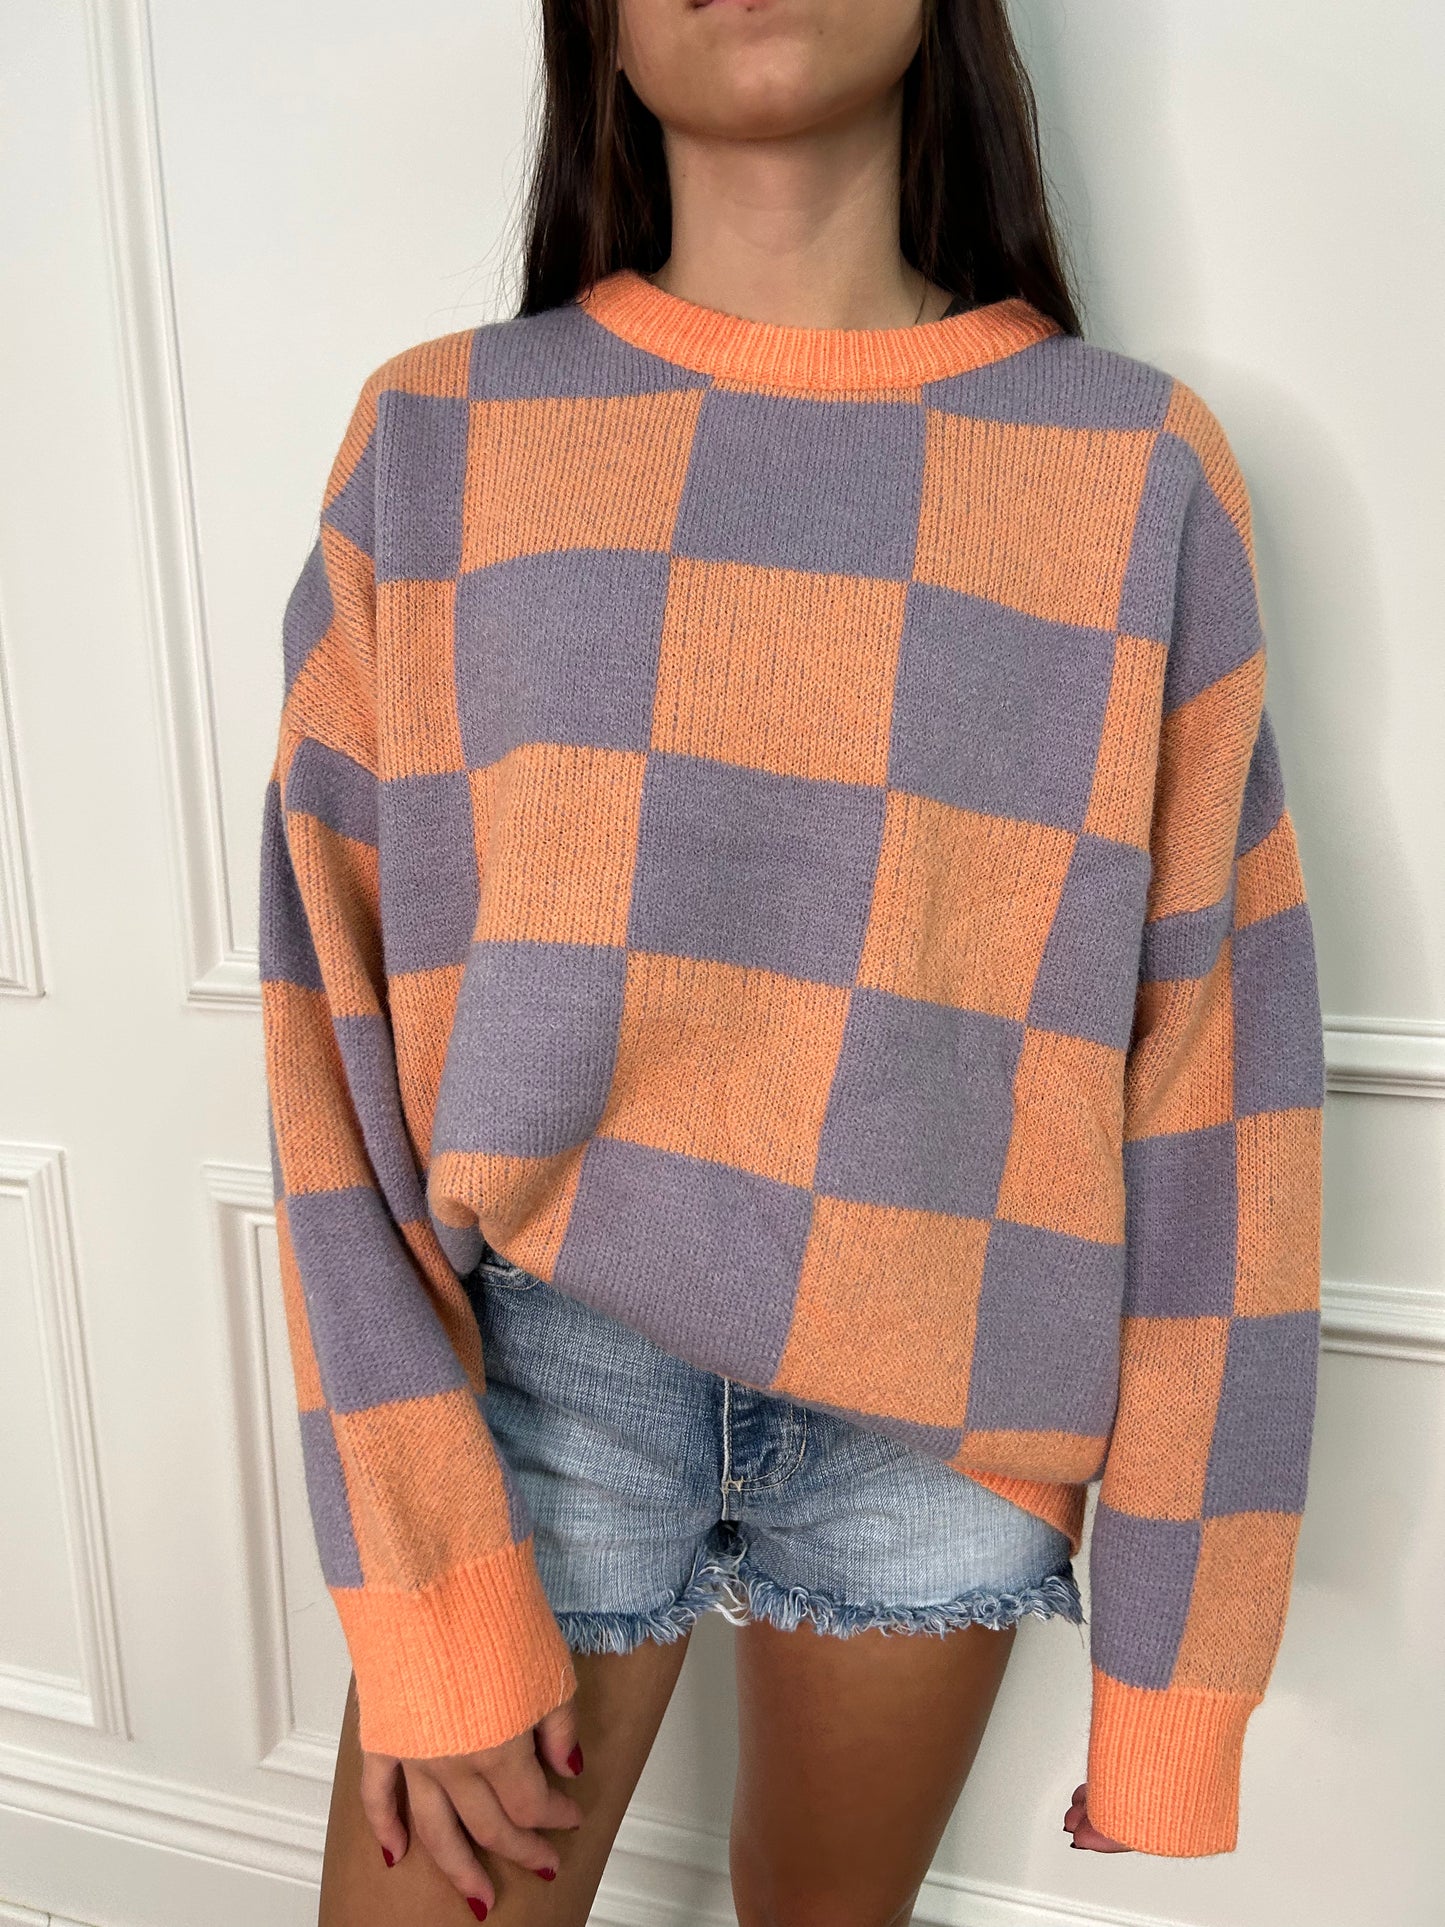 Retro Purple and Orange sweater